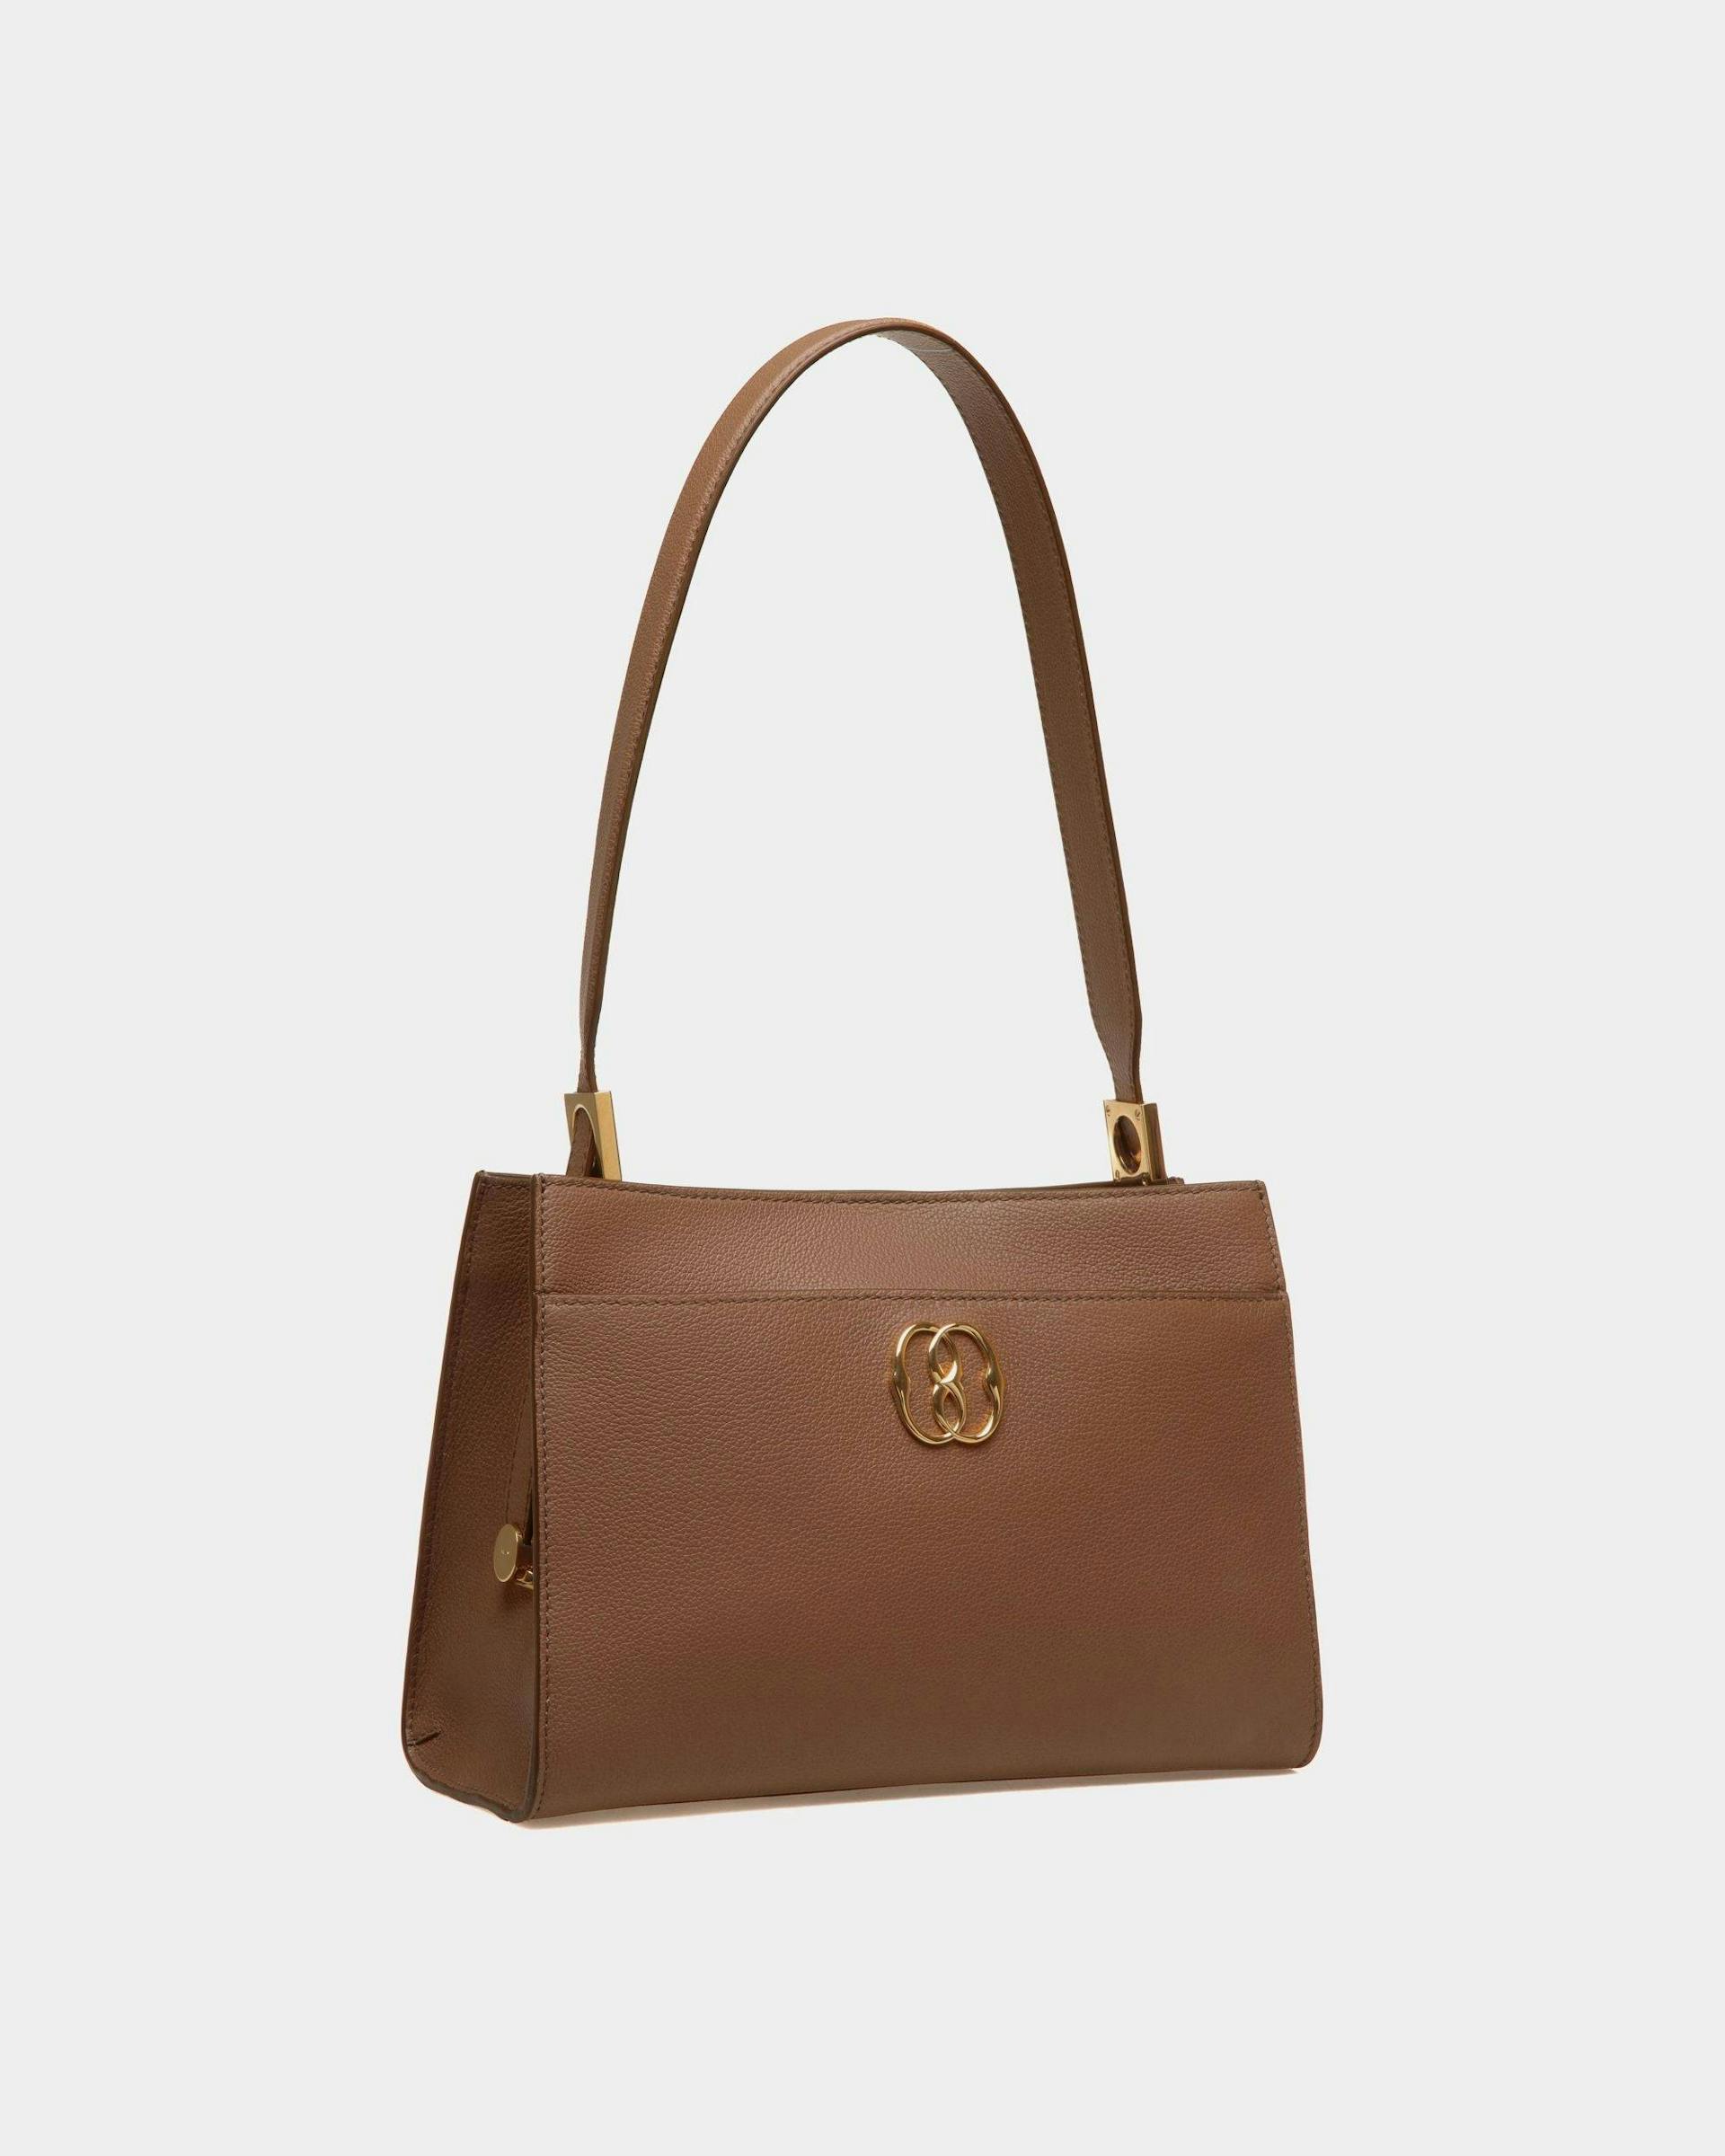 Women's Emblem Shoulder Bag in Brown Grained Leather | Bally | Still Life 3/4 Front